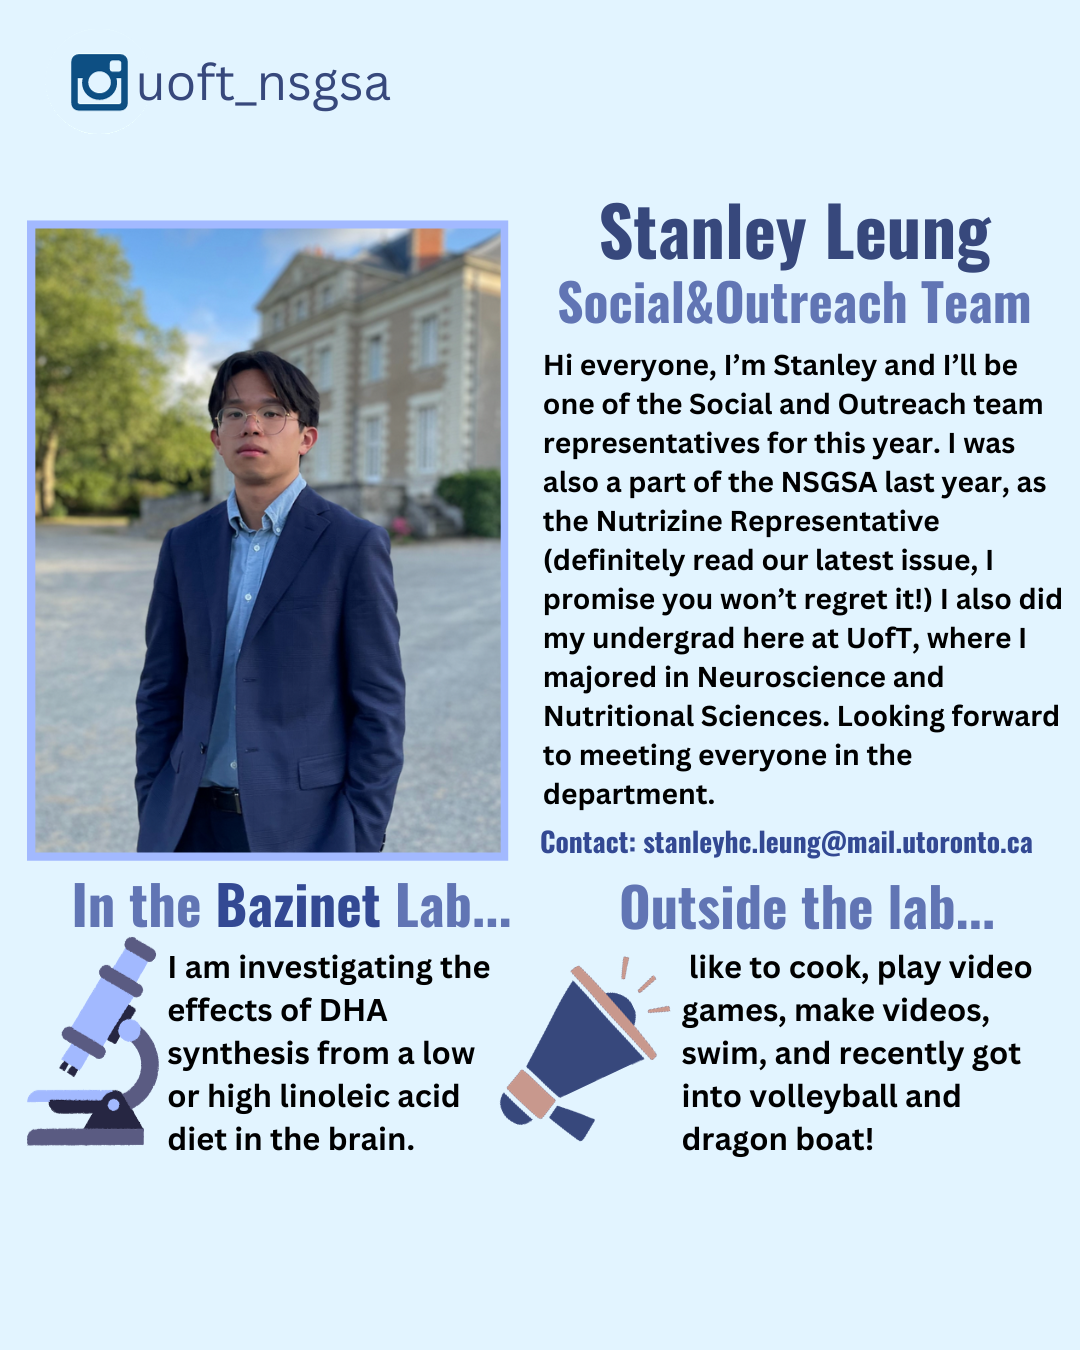 Stanley Leung, Social & Outreach Team